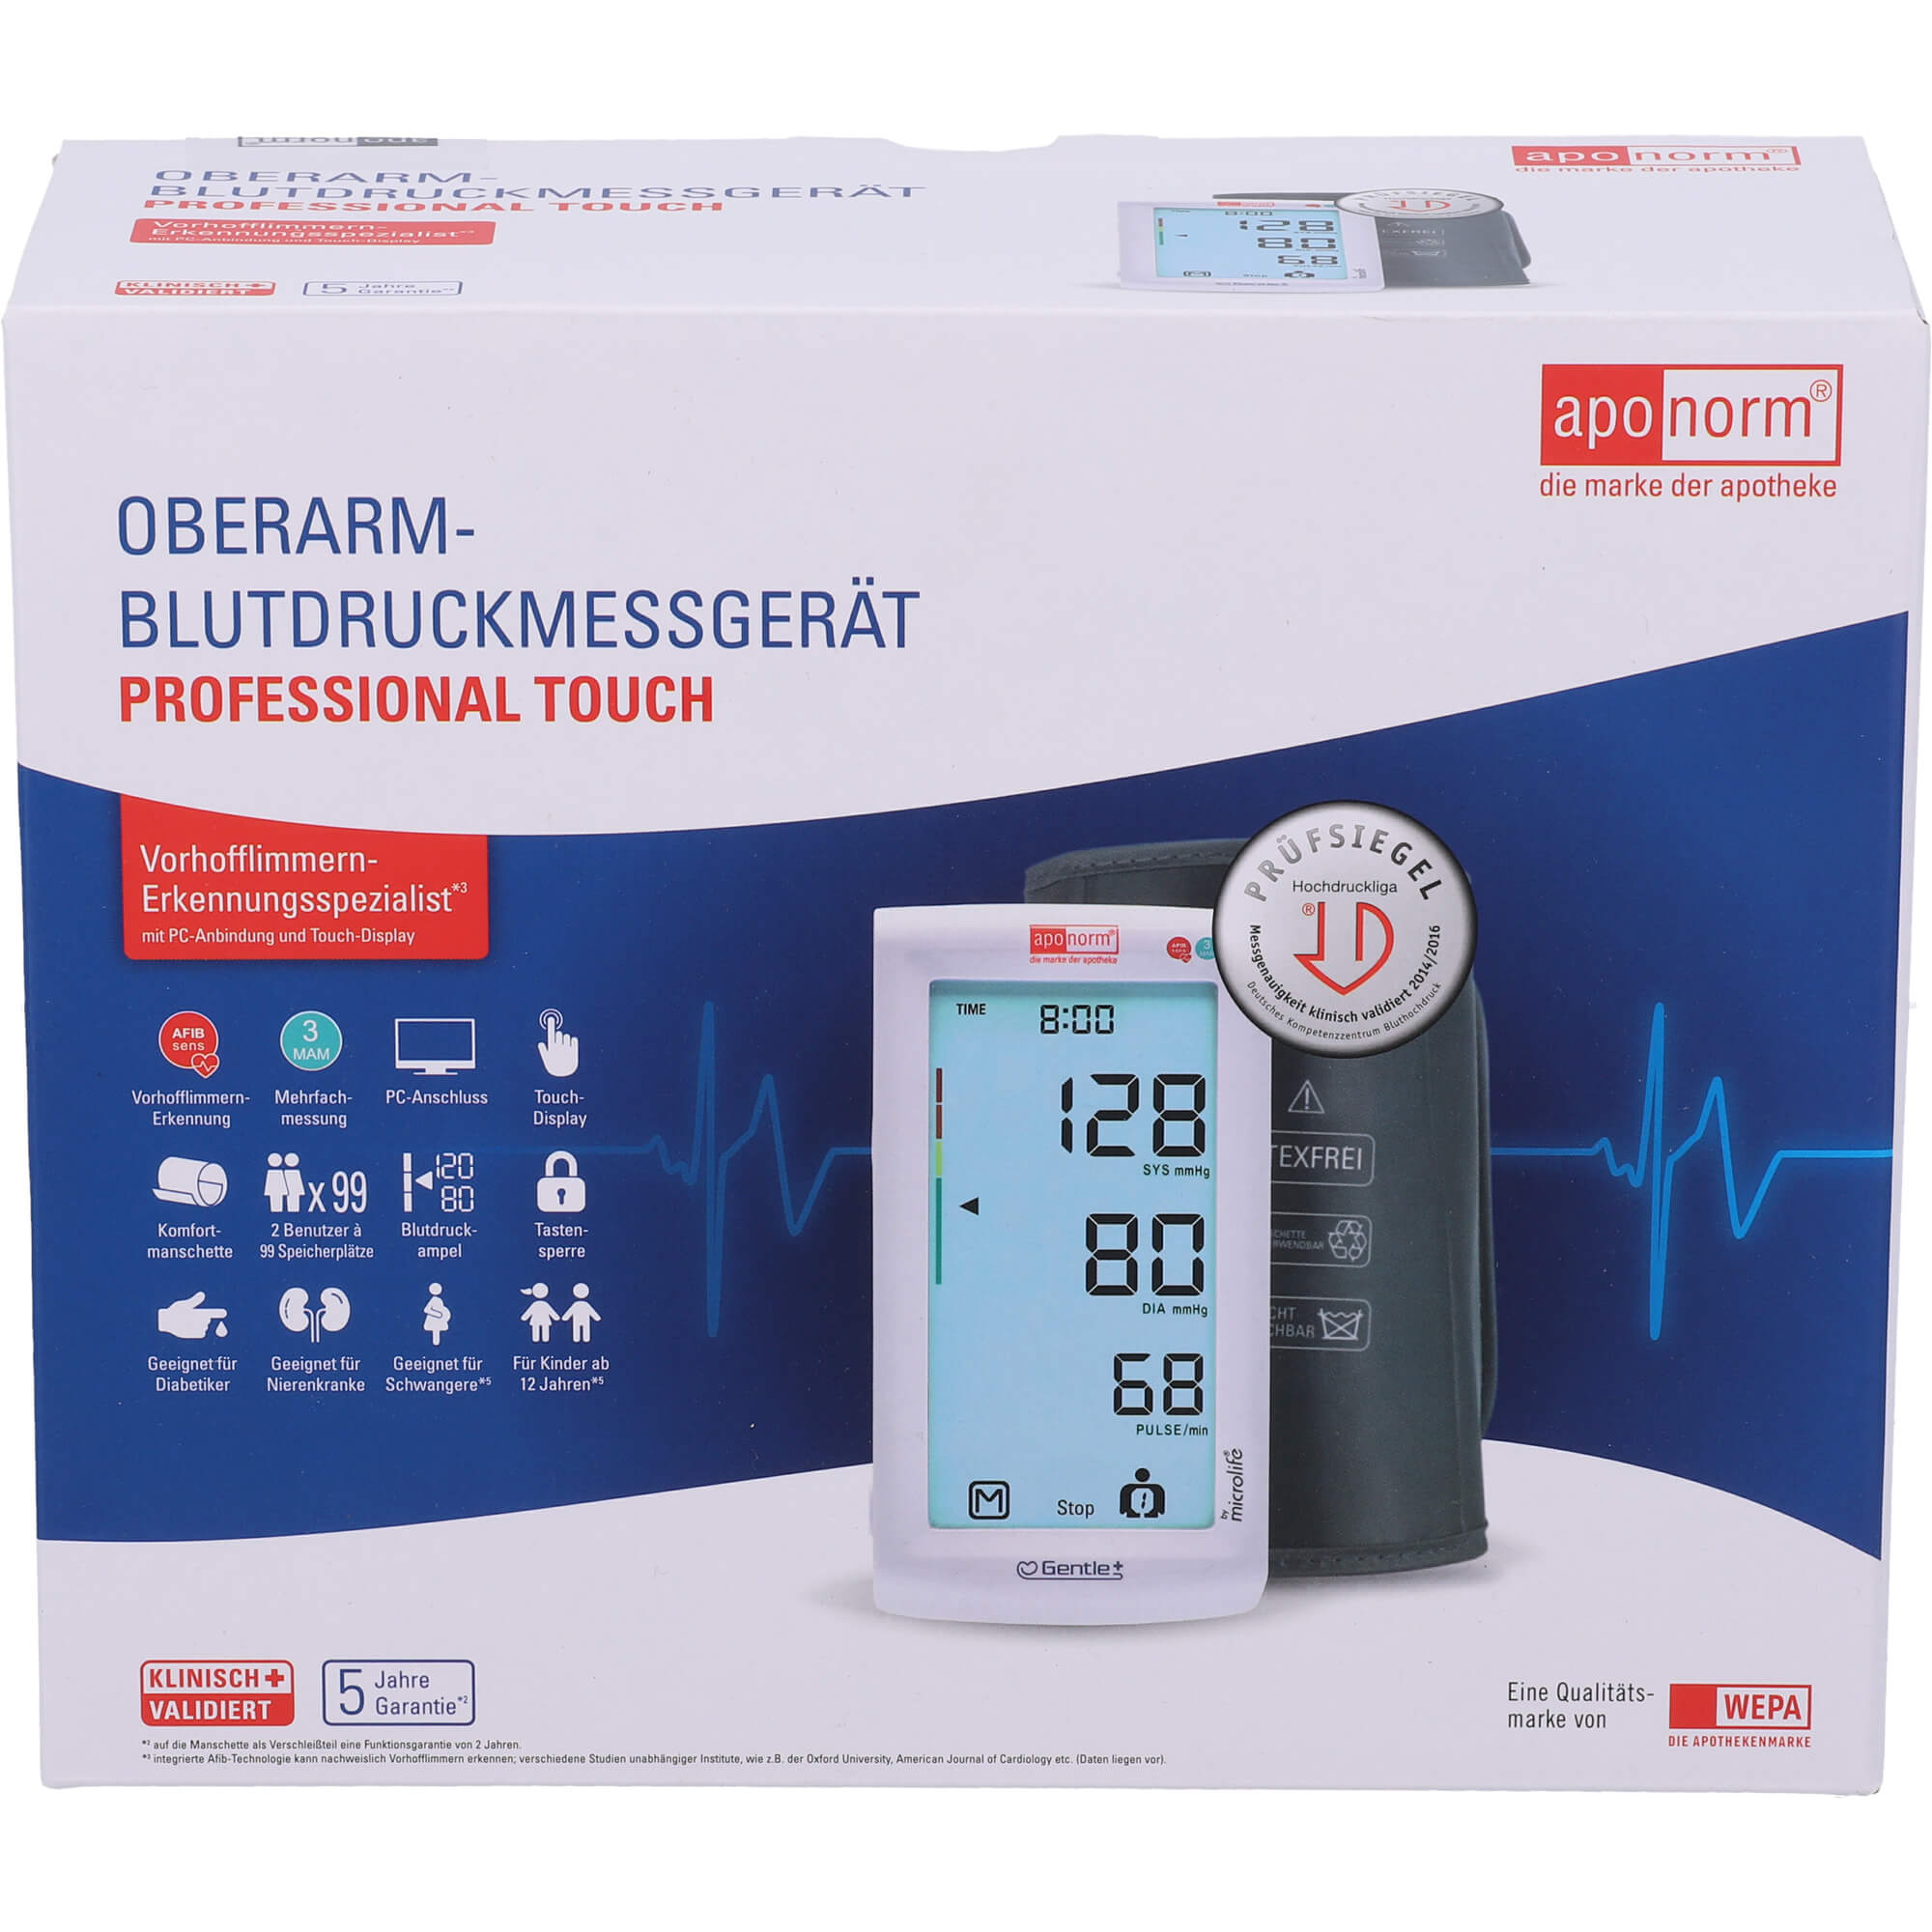 APONORM Blutdruck Messgerät Professional Touch Oberarm